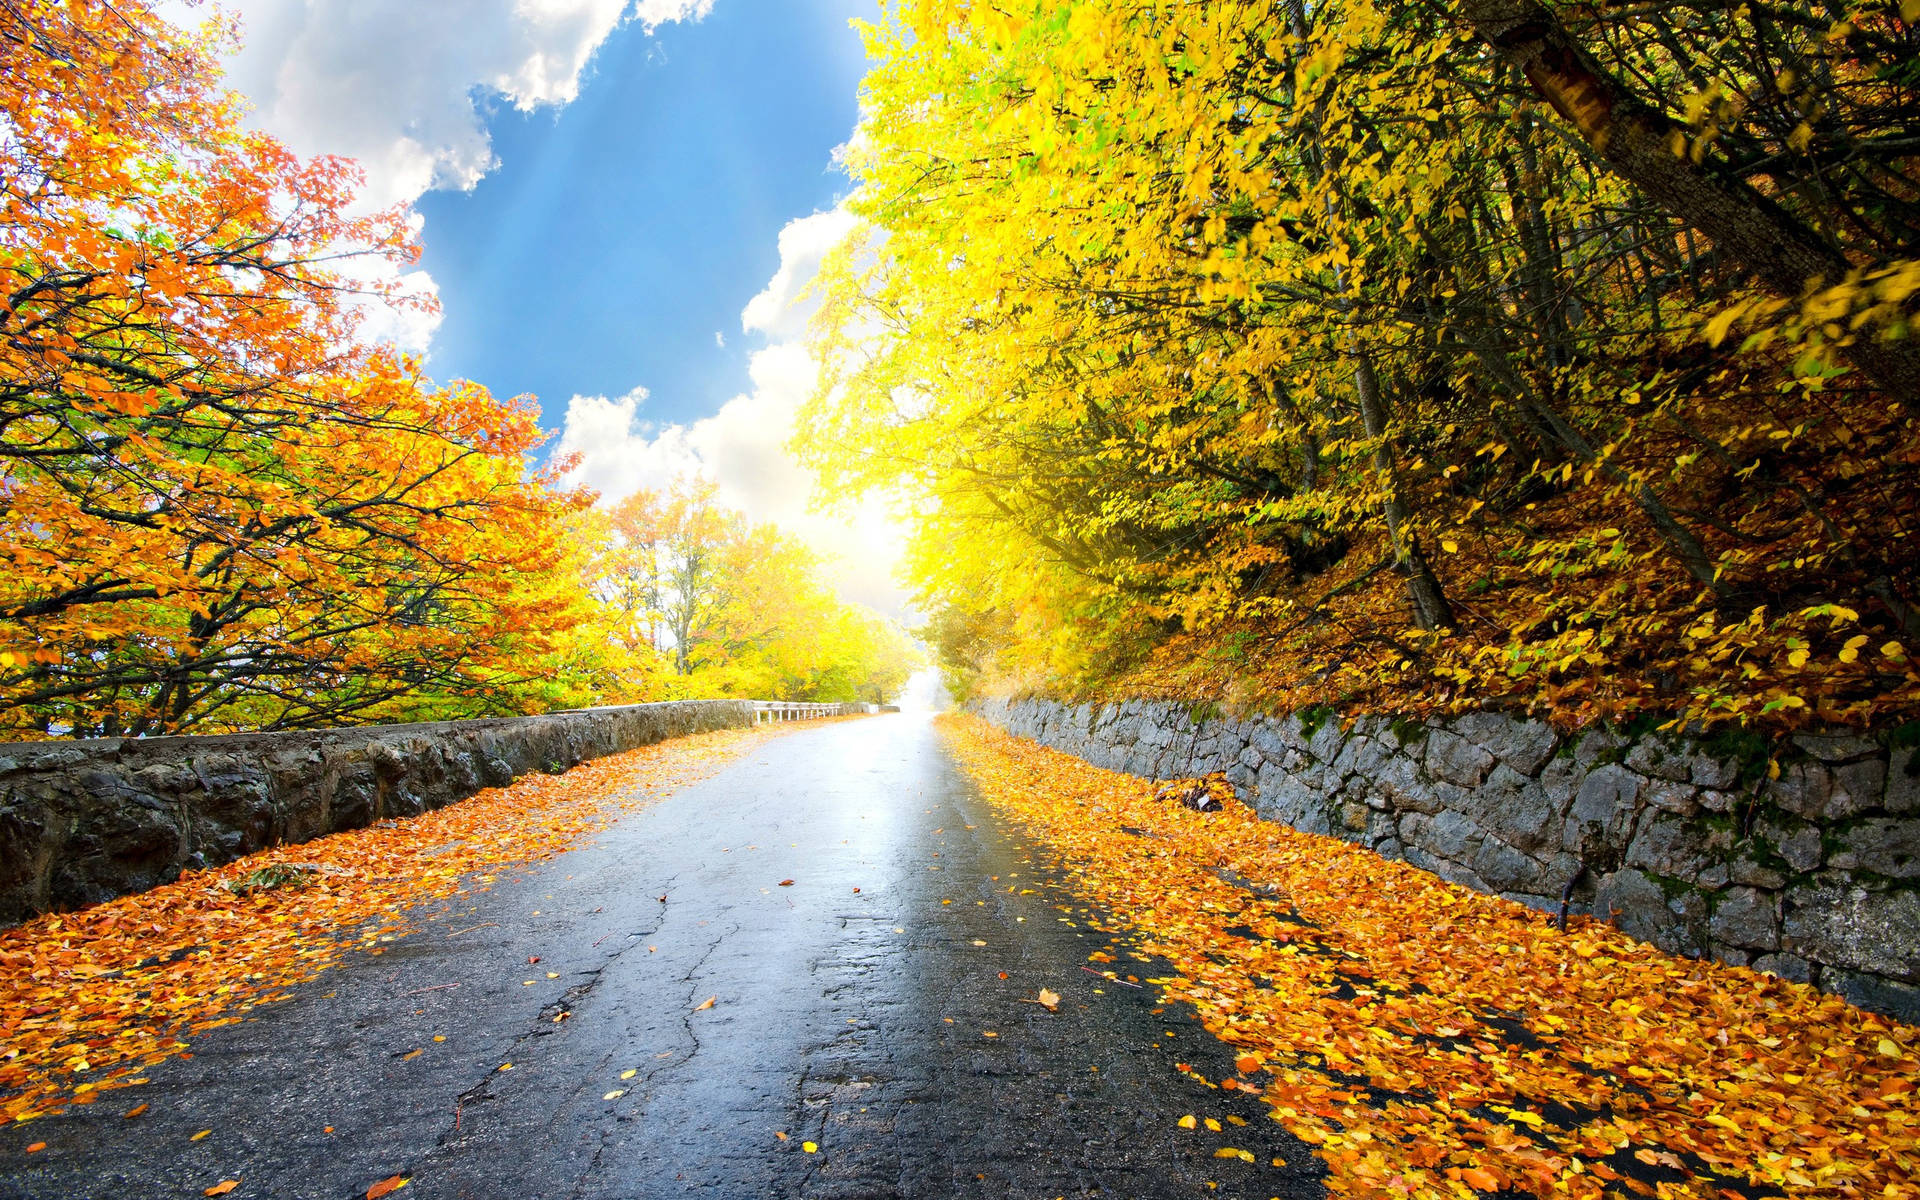 4k Autumn Road Wallpaper